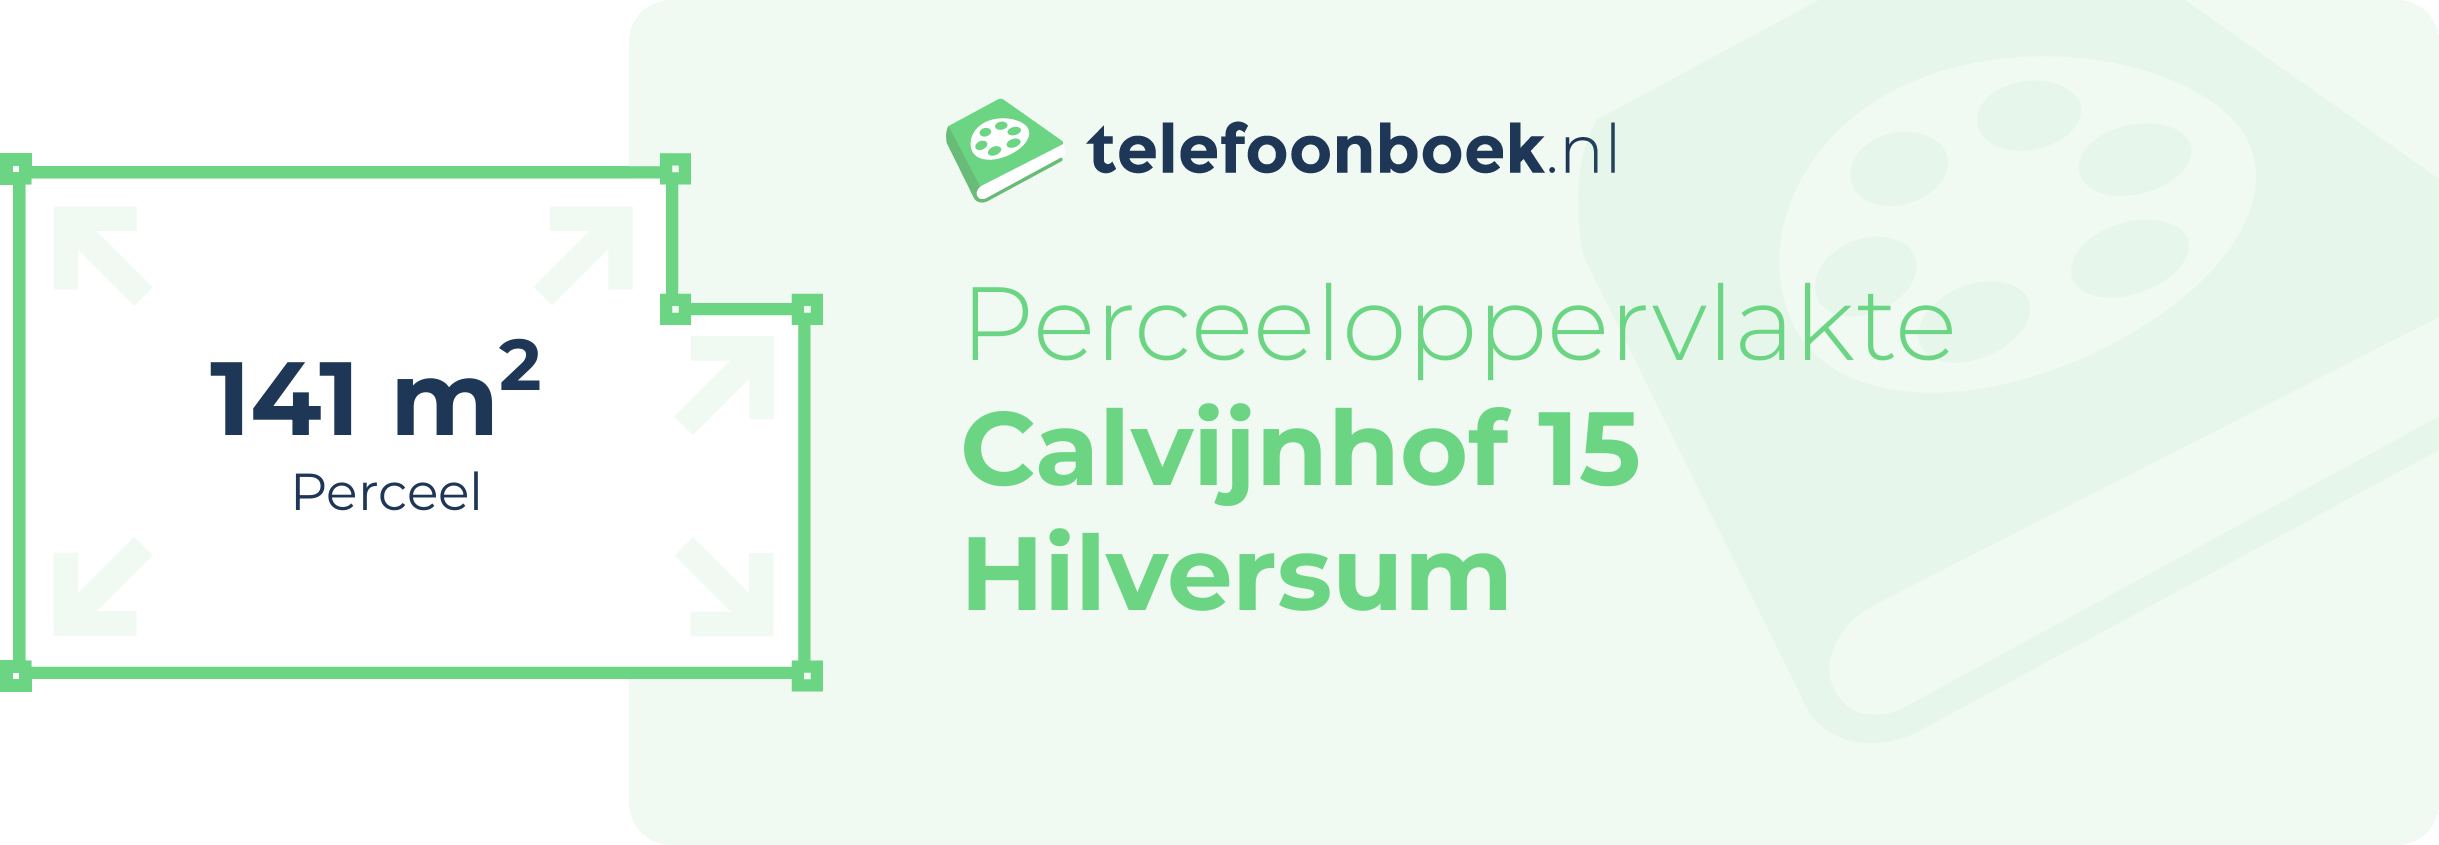 Perceeloppervlakte Calvijnhof 15 Hilversum